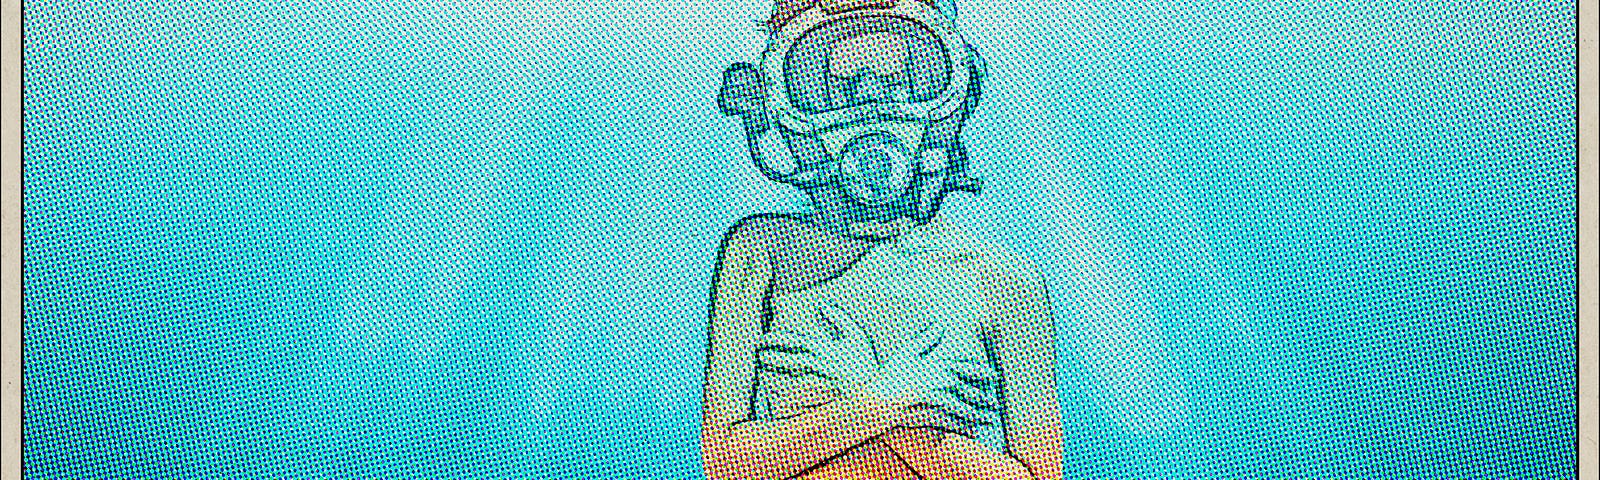 Woman in diving helmet covers breasts